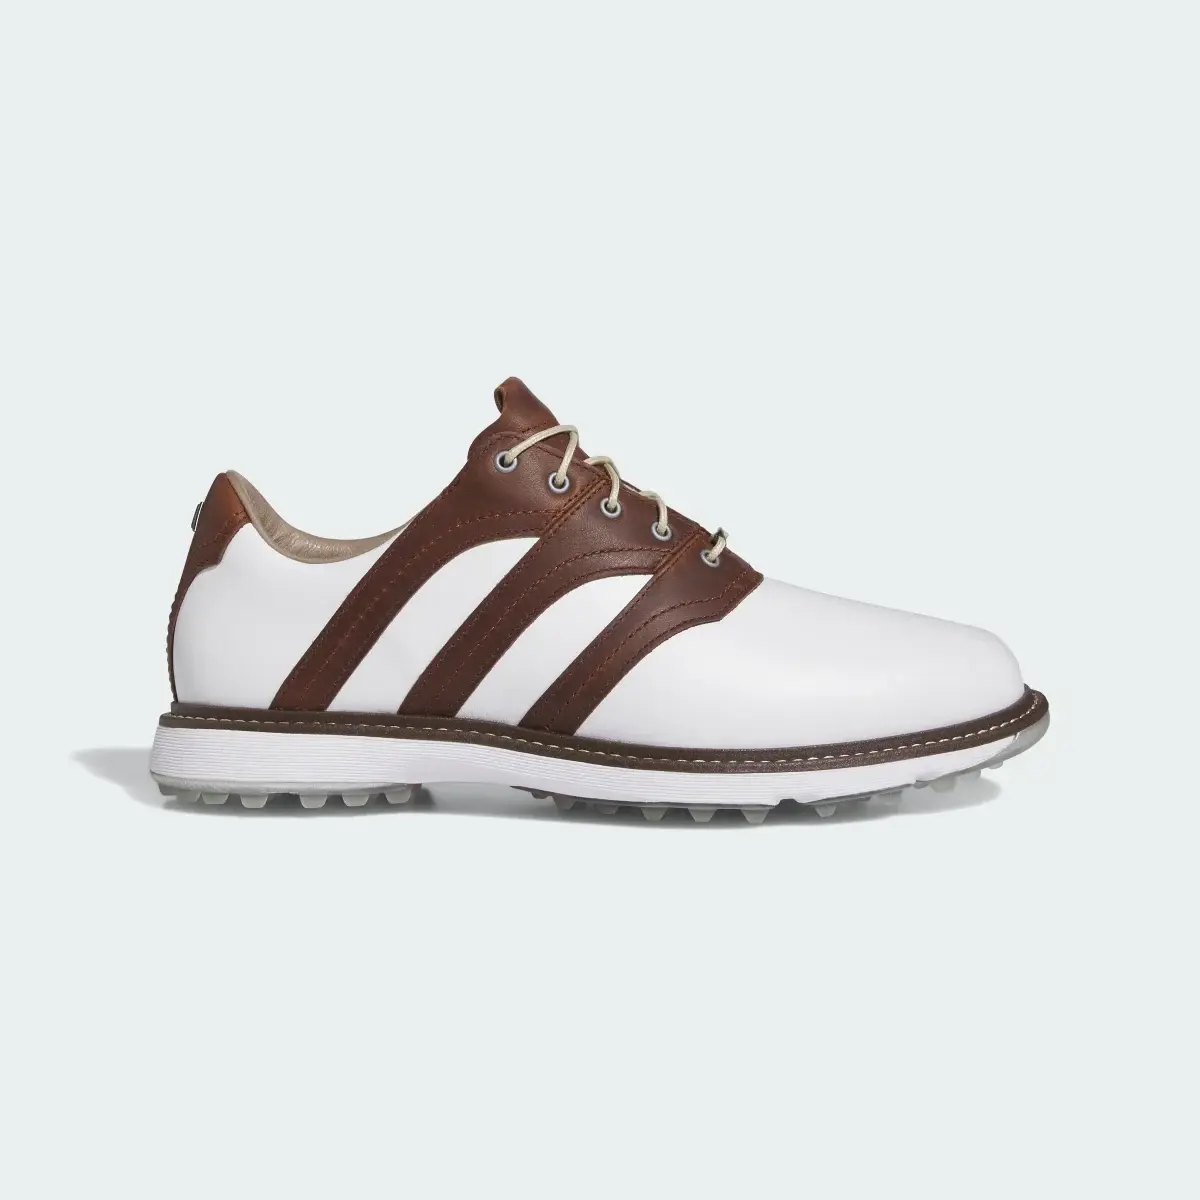 Adidas MC Z-Traxion Spikeless Golf Shoes. 2